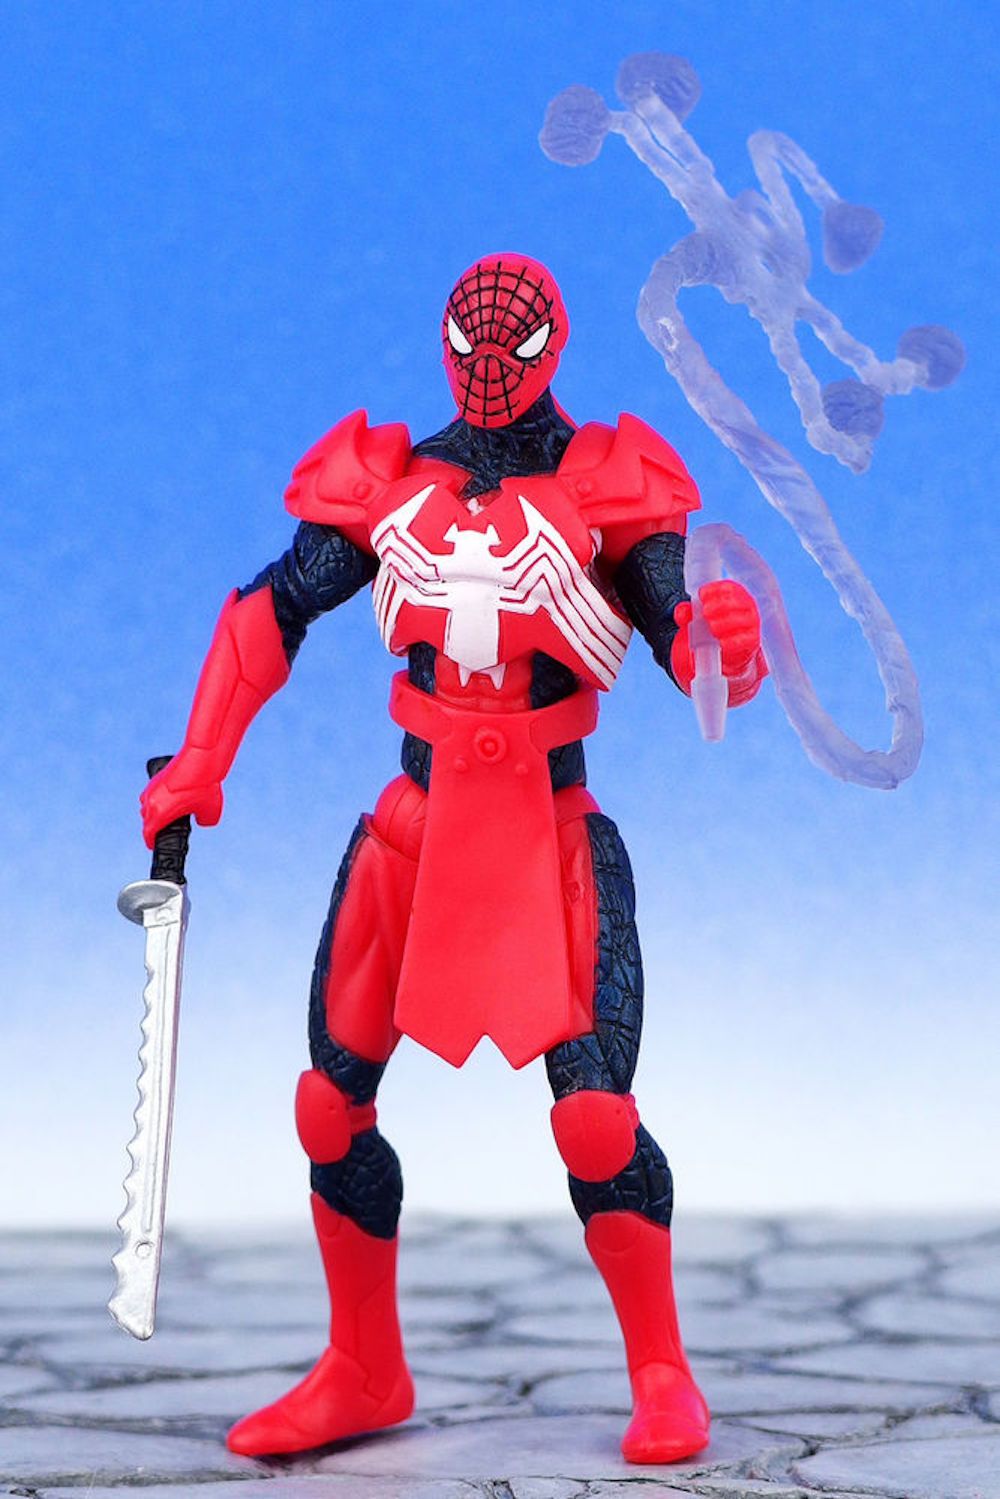 ninja spiderman toy